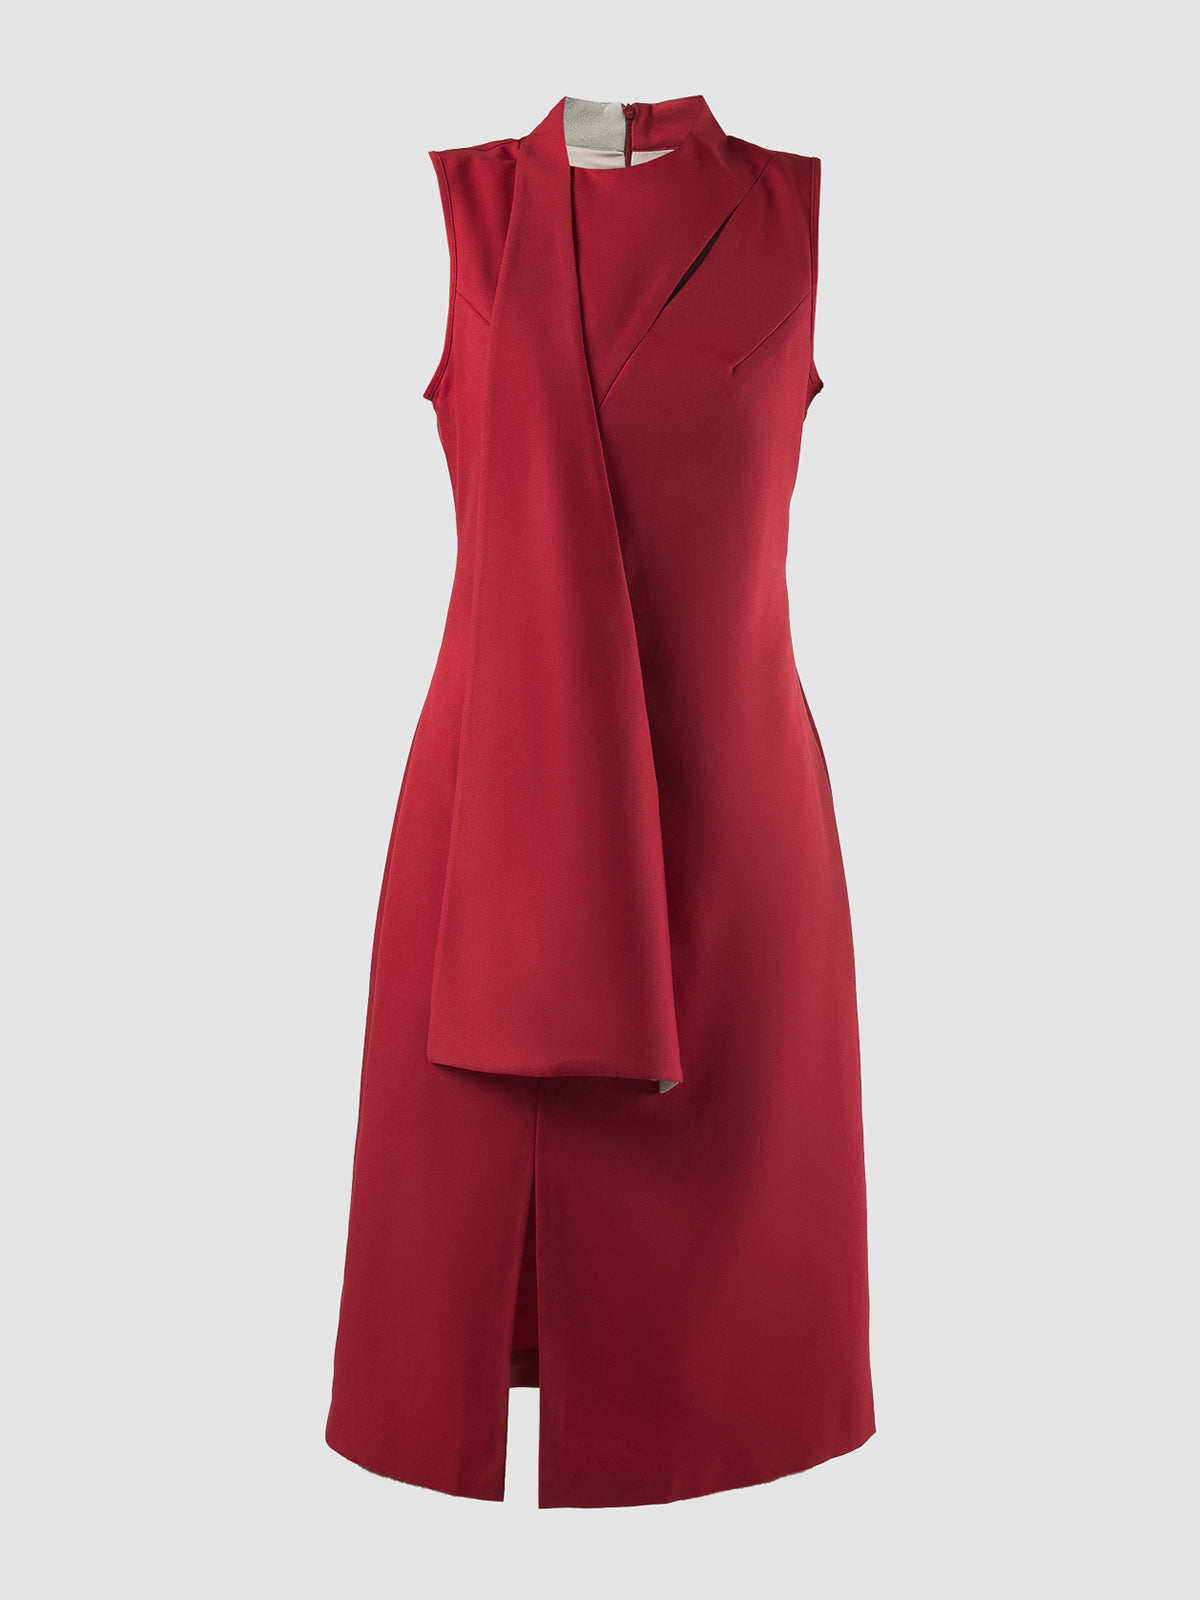 Red Clara dress with neck sash